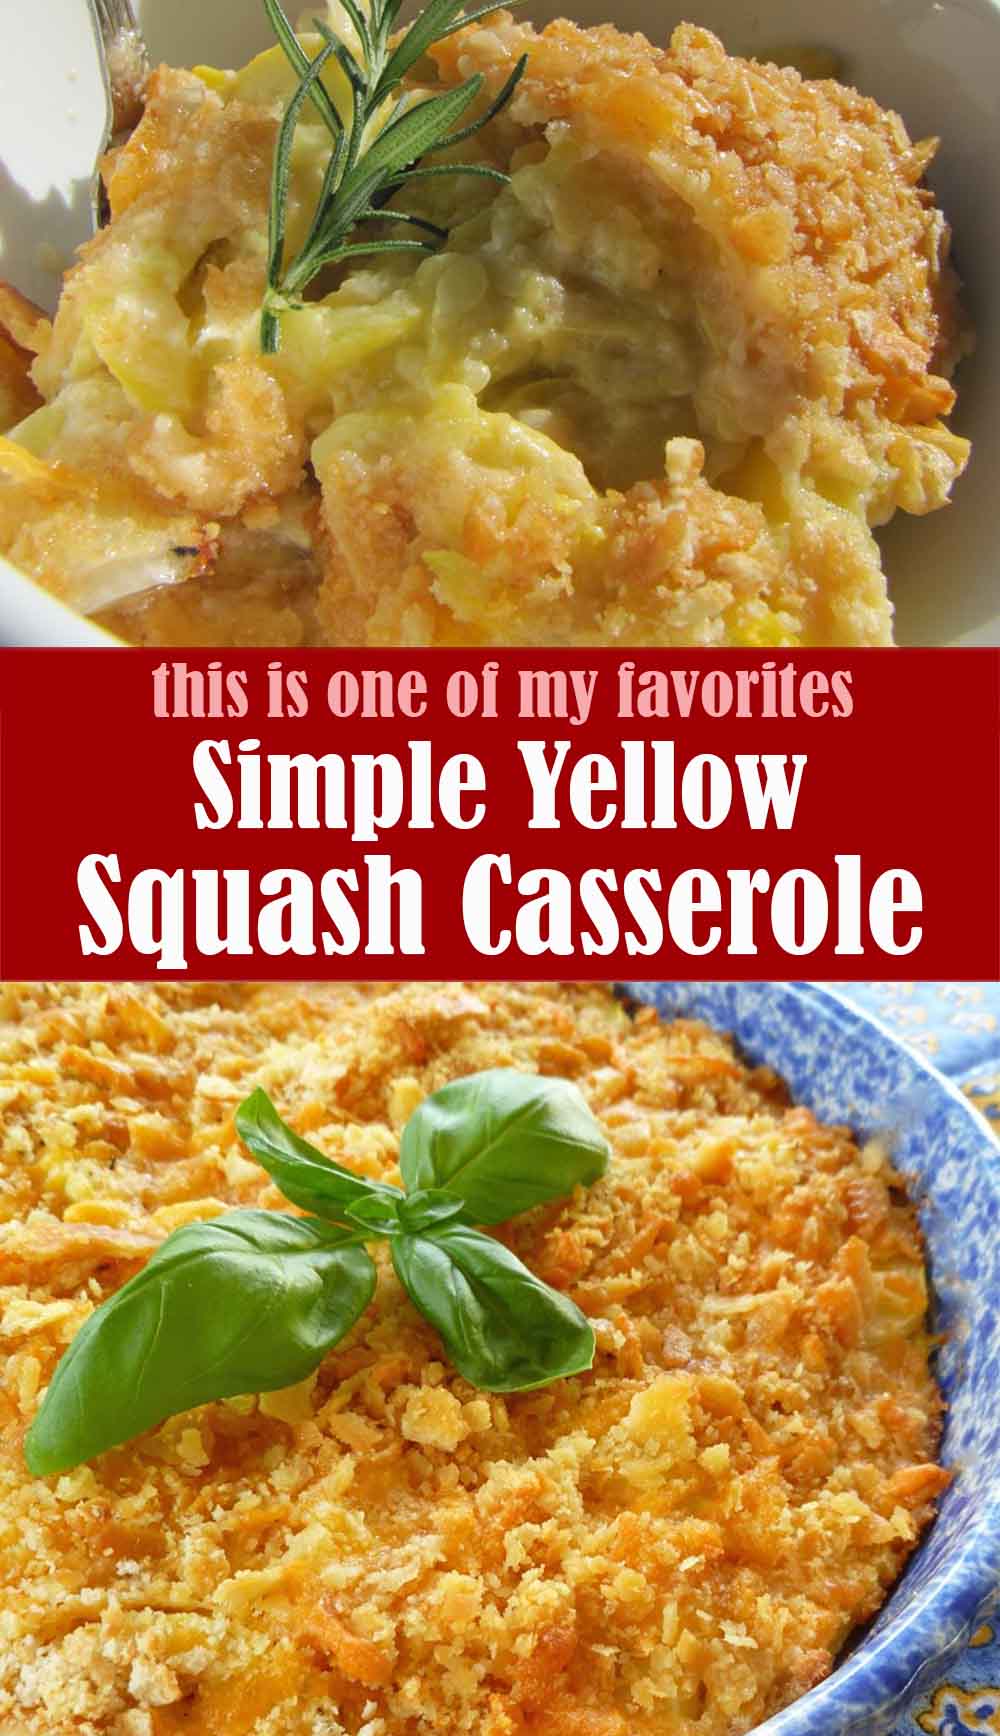 Simple Yellow Squash Casserole Recipe